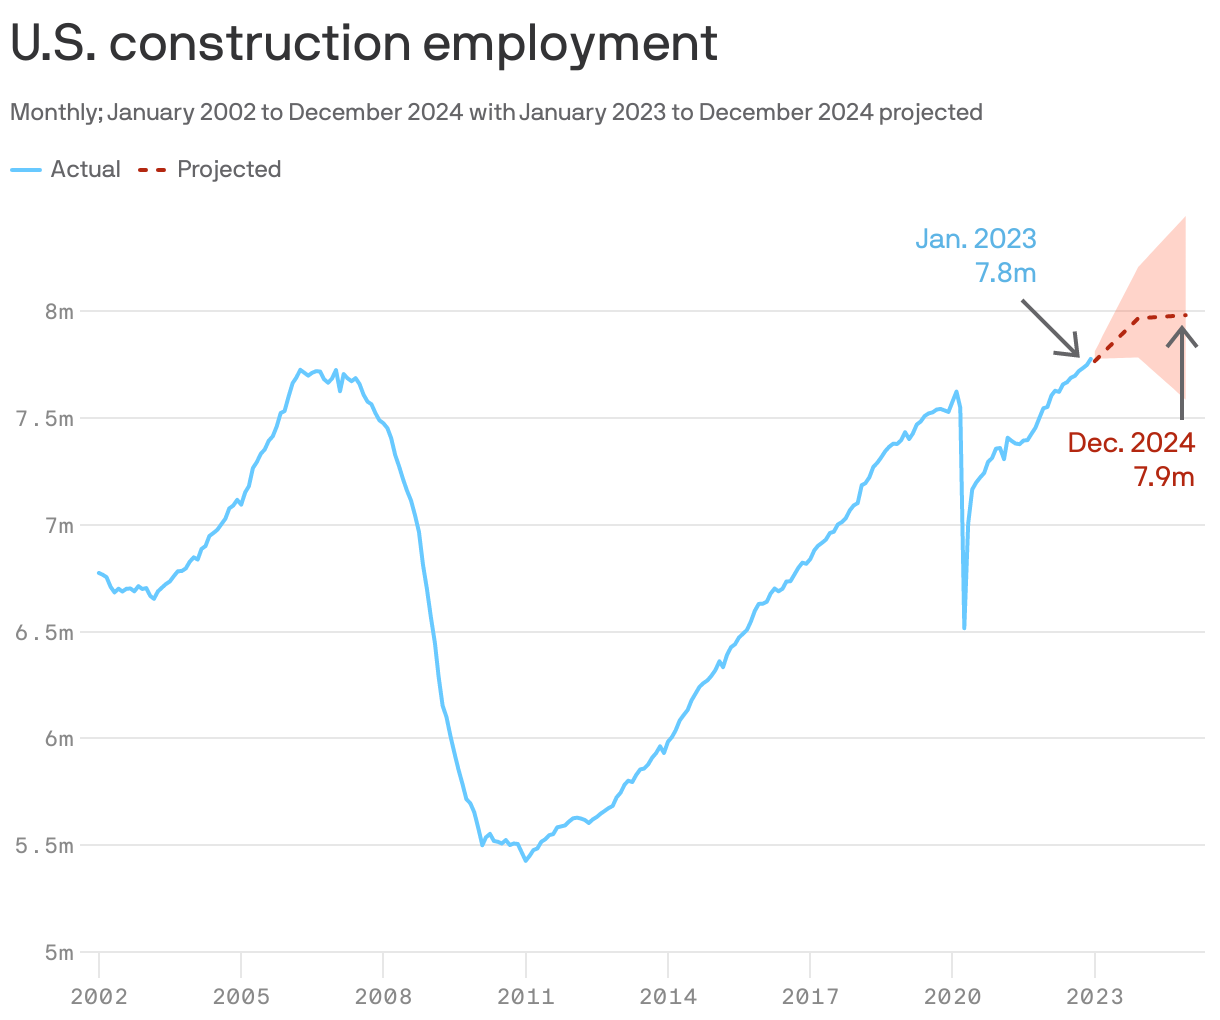 U.S. construction employment